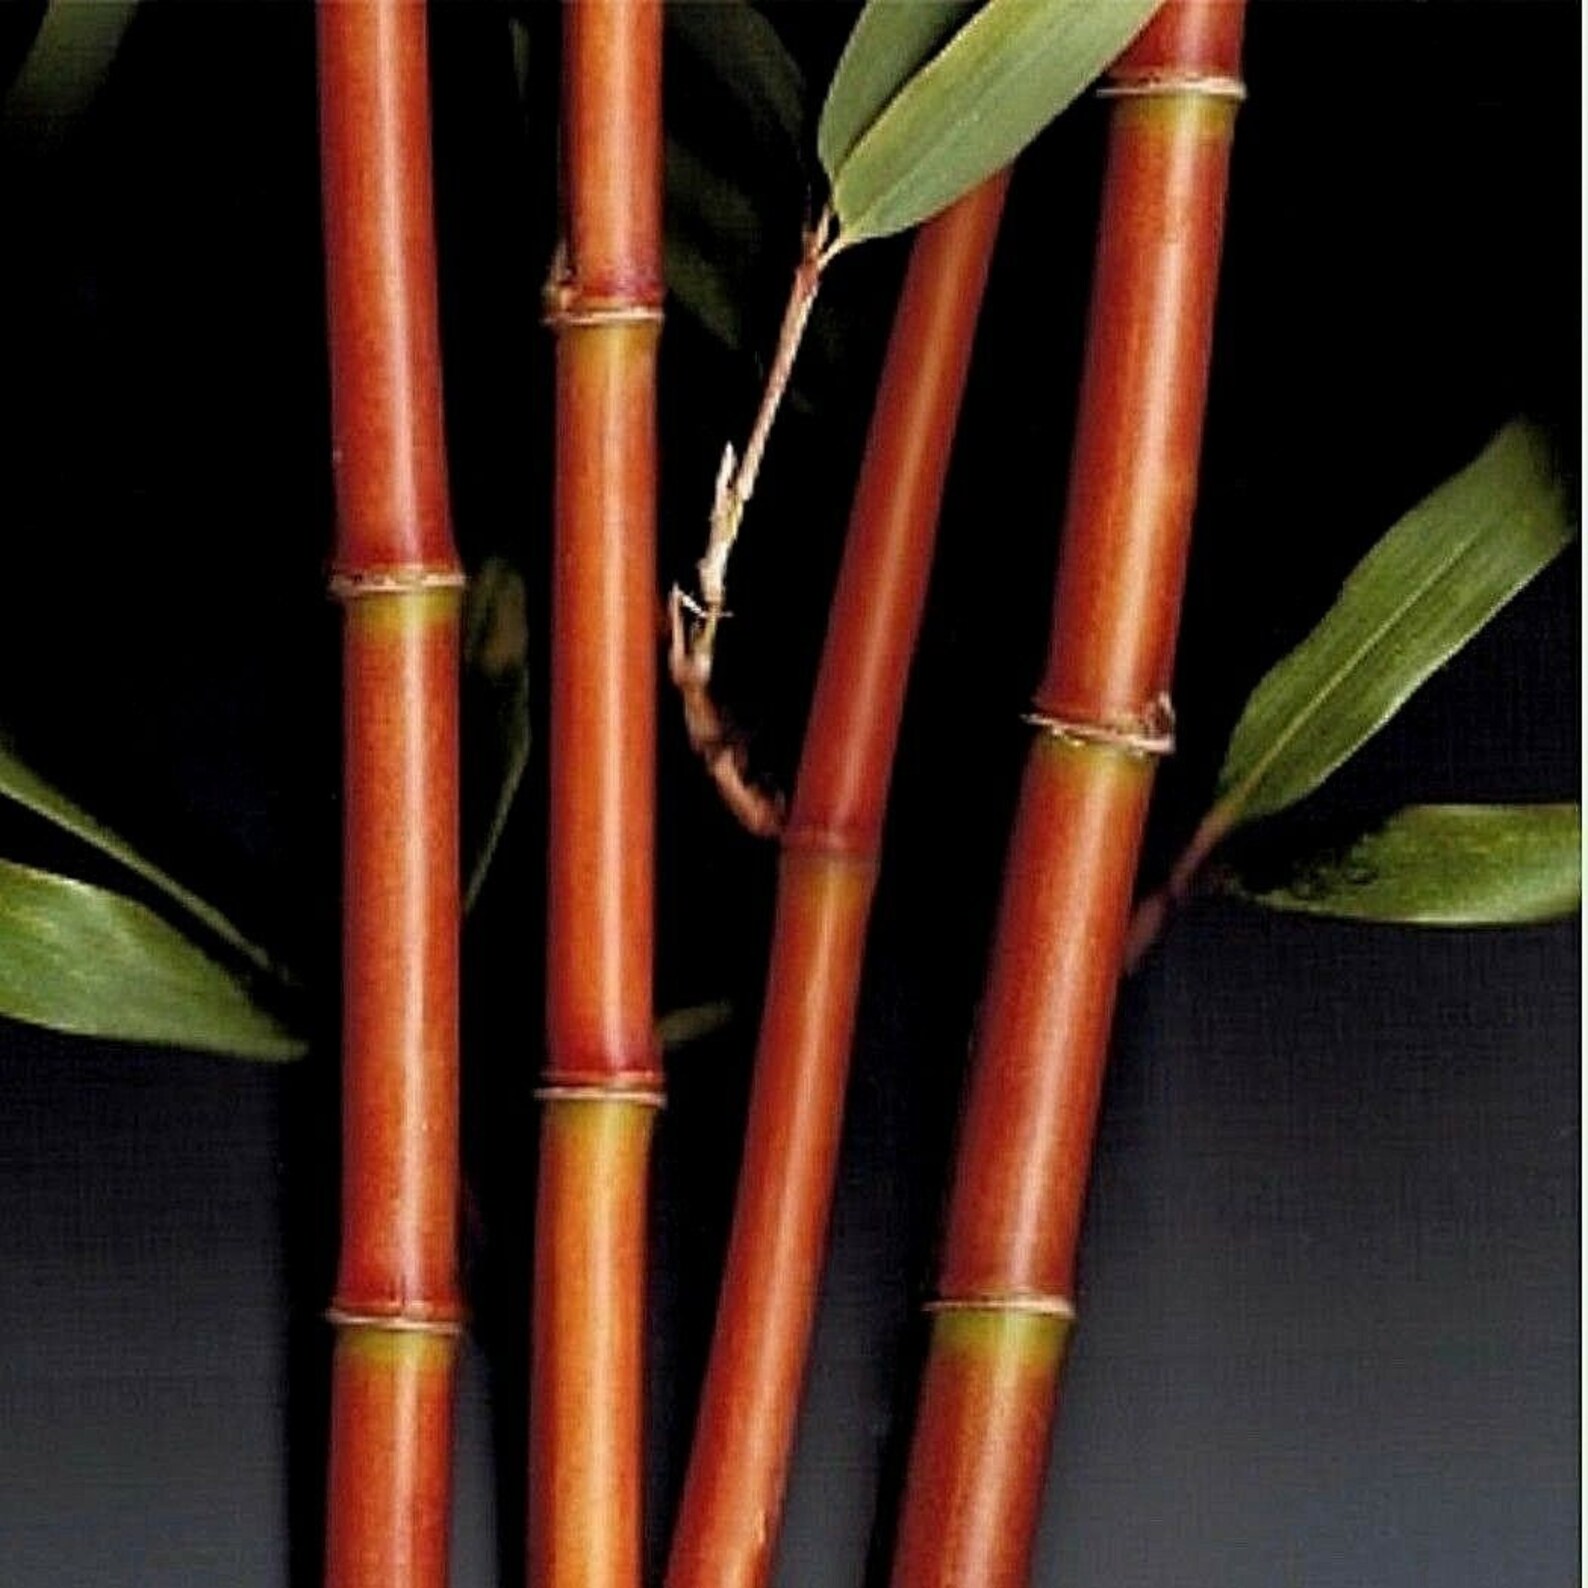 Big bamboo в рублях play bigbamboo com. Красный бамбук (Fargesia nitida). Бамбусоидес Кастильон бамбук. Бамбук с красным стволом. Бамбук с красным стволом растение.